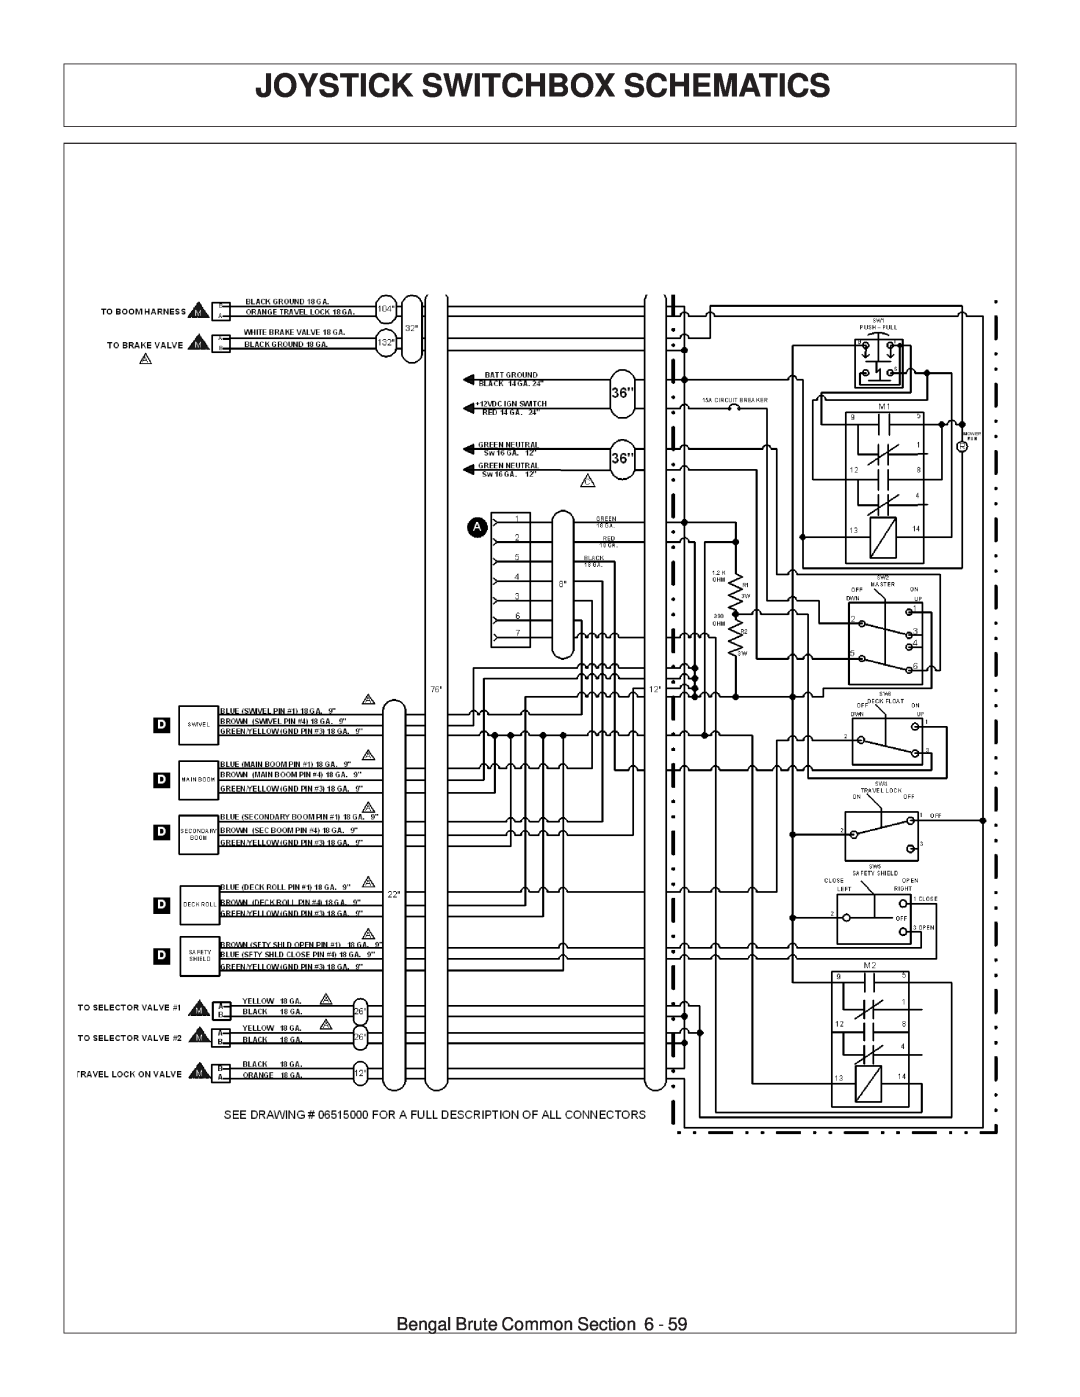 Tiger JD 62-6420 manual Joystick Switchbox Schematics, Bengal Brute Common 